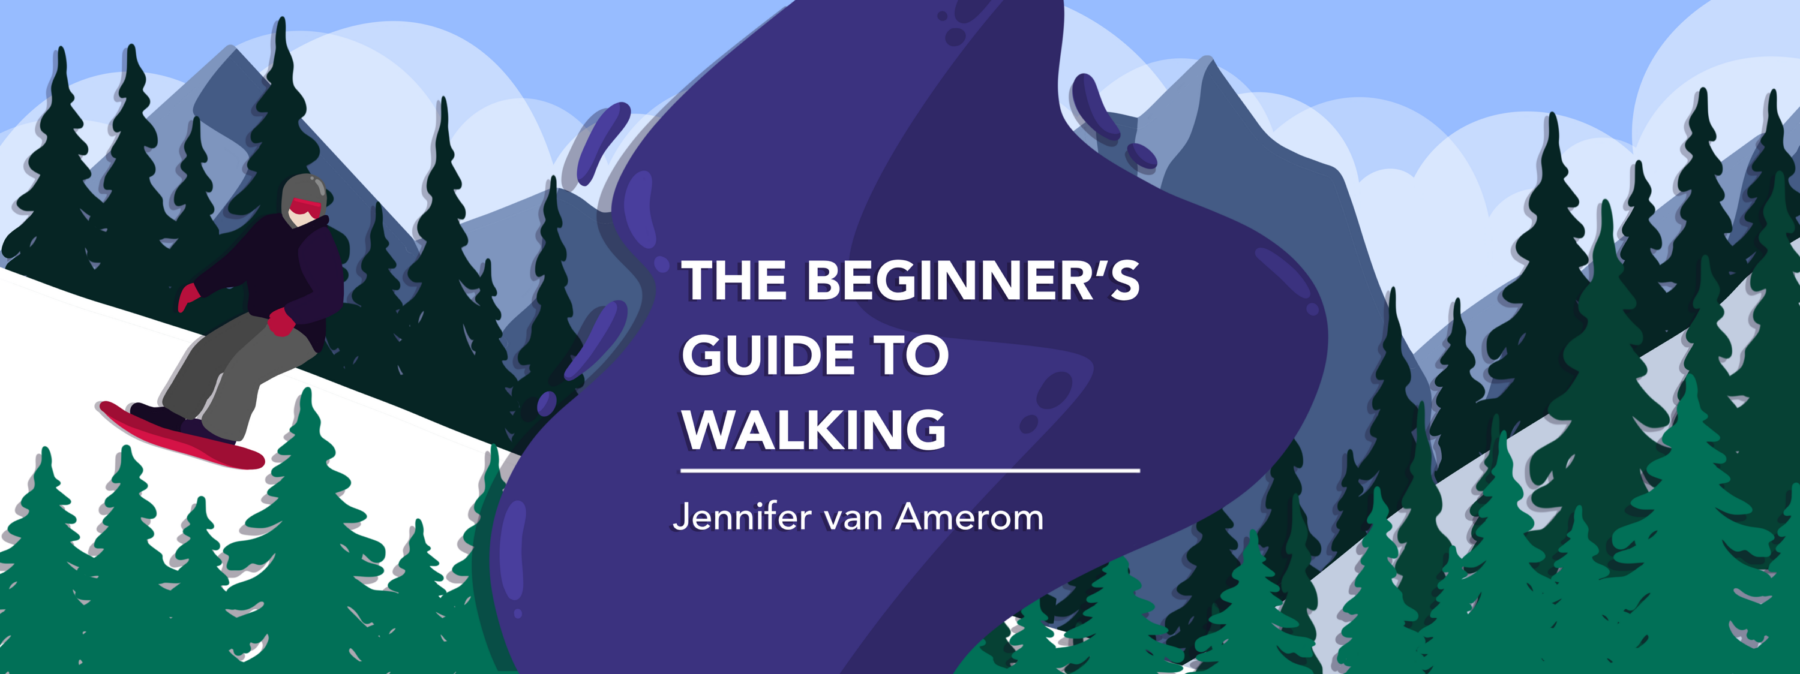 Banner for The Beginner's Guide to Walking by Jennifer van Amerom